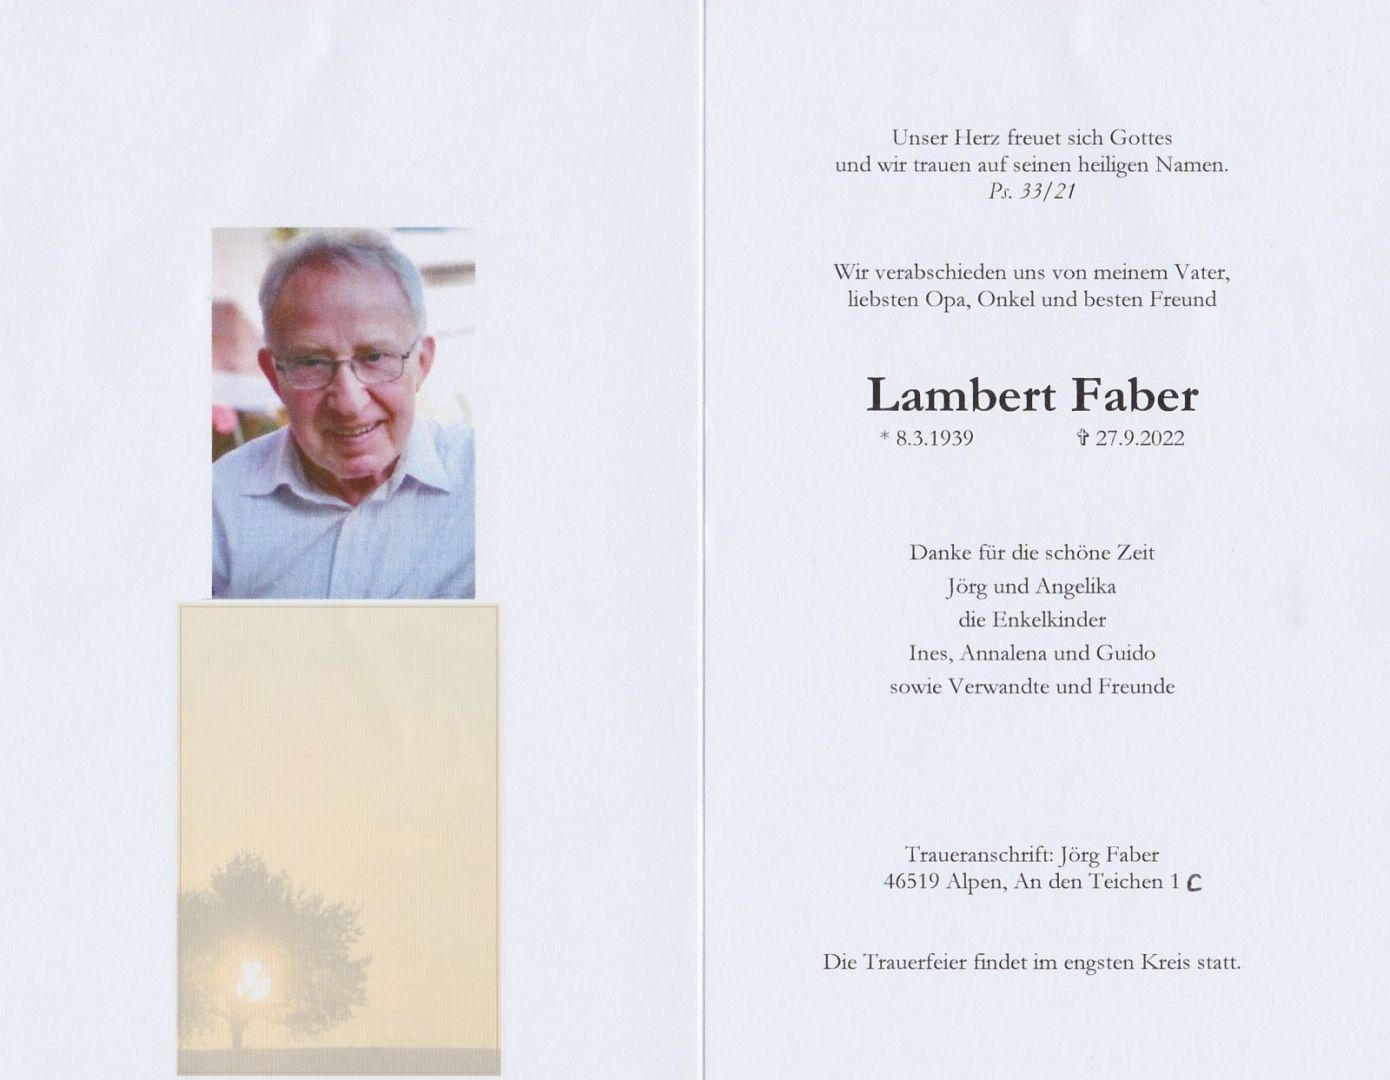 Lambert Faber